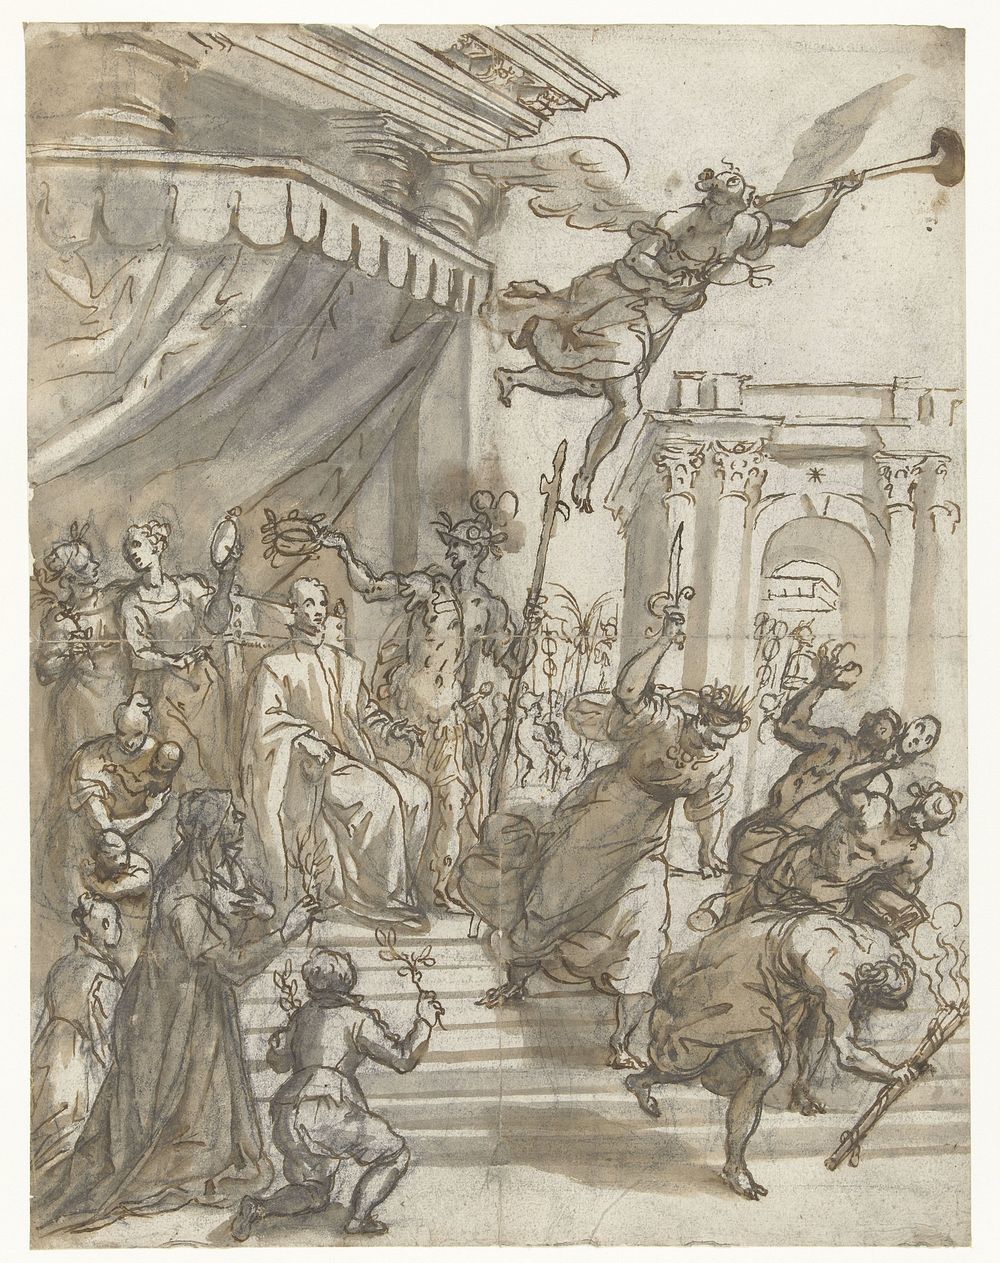 Kroning van een Magistraat (1605 - 1615) by Alessandro Maganza and Giovanni Battista Maganza I